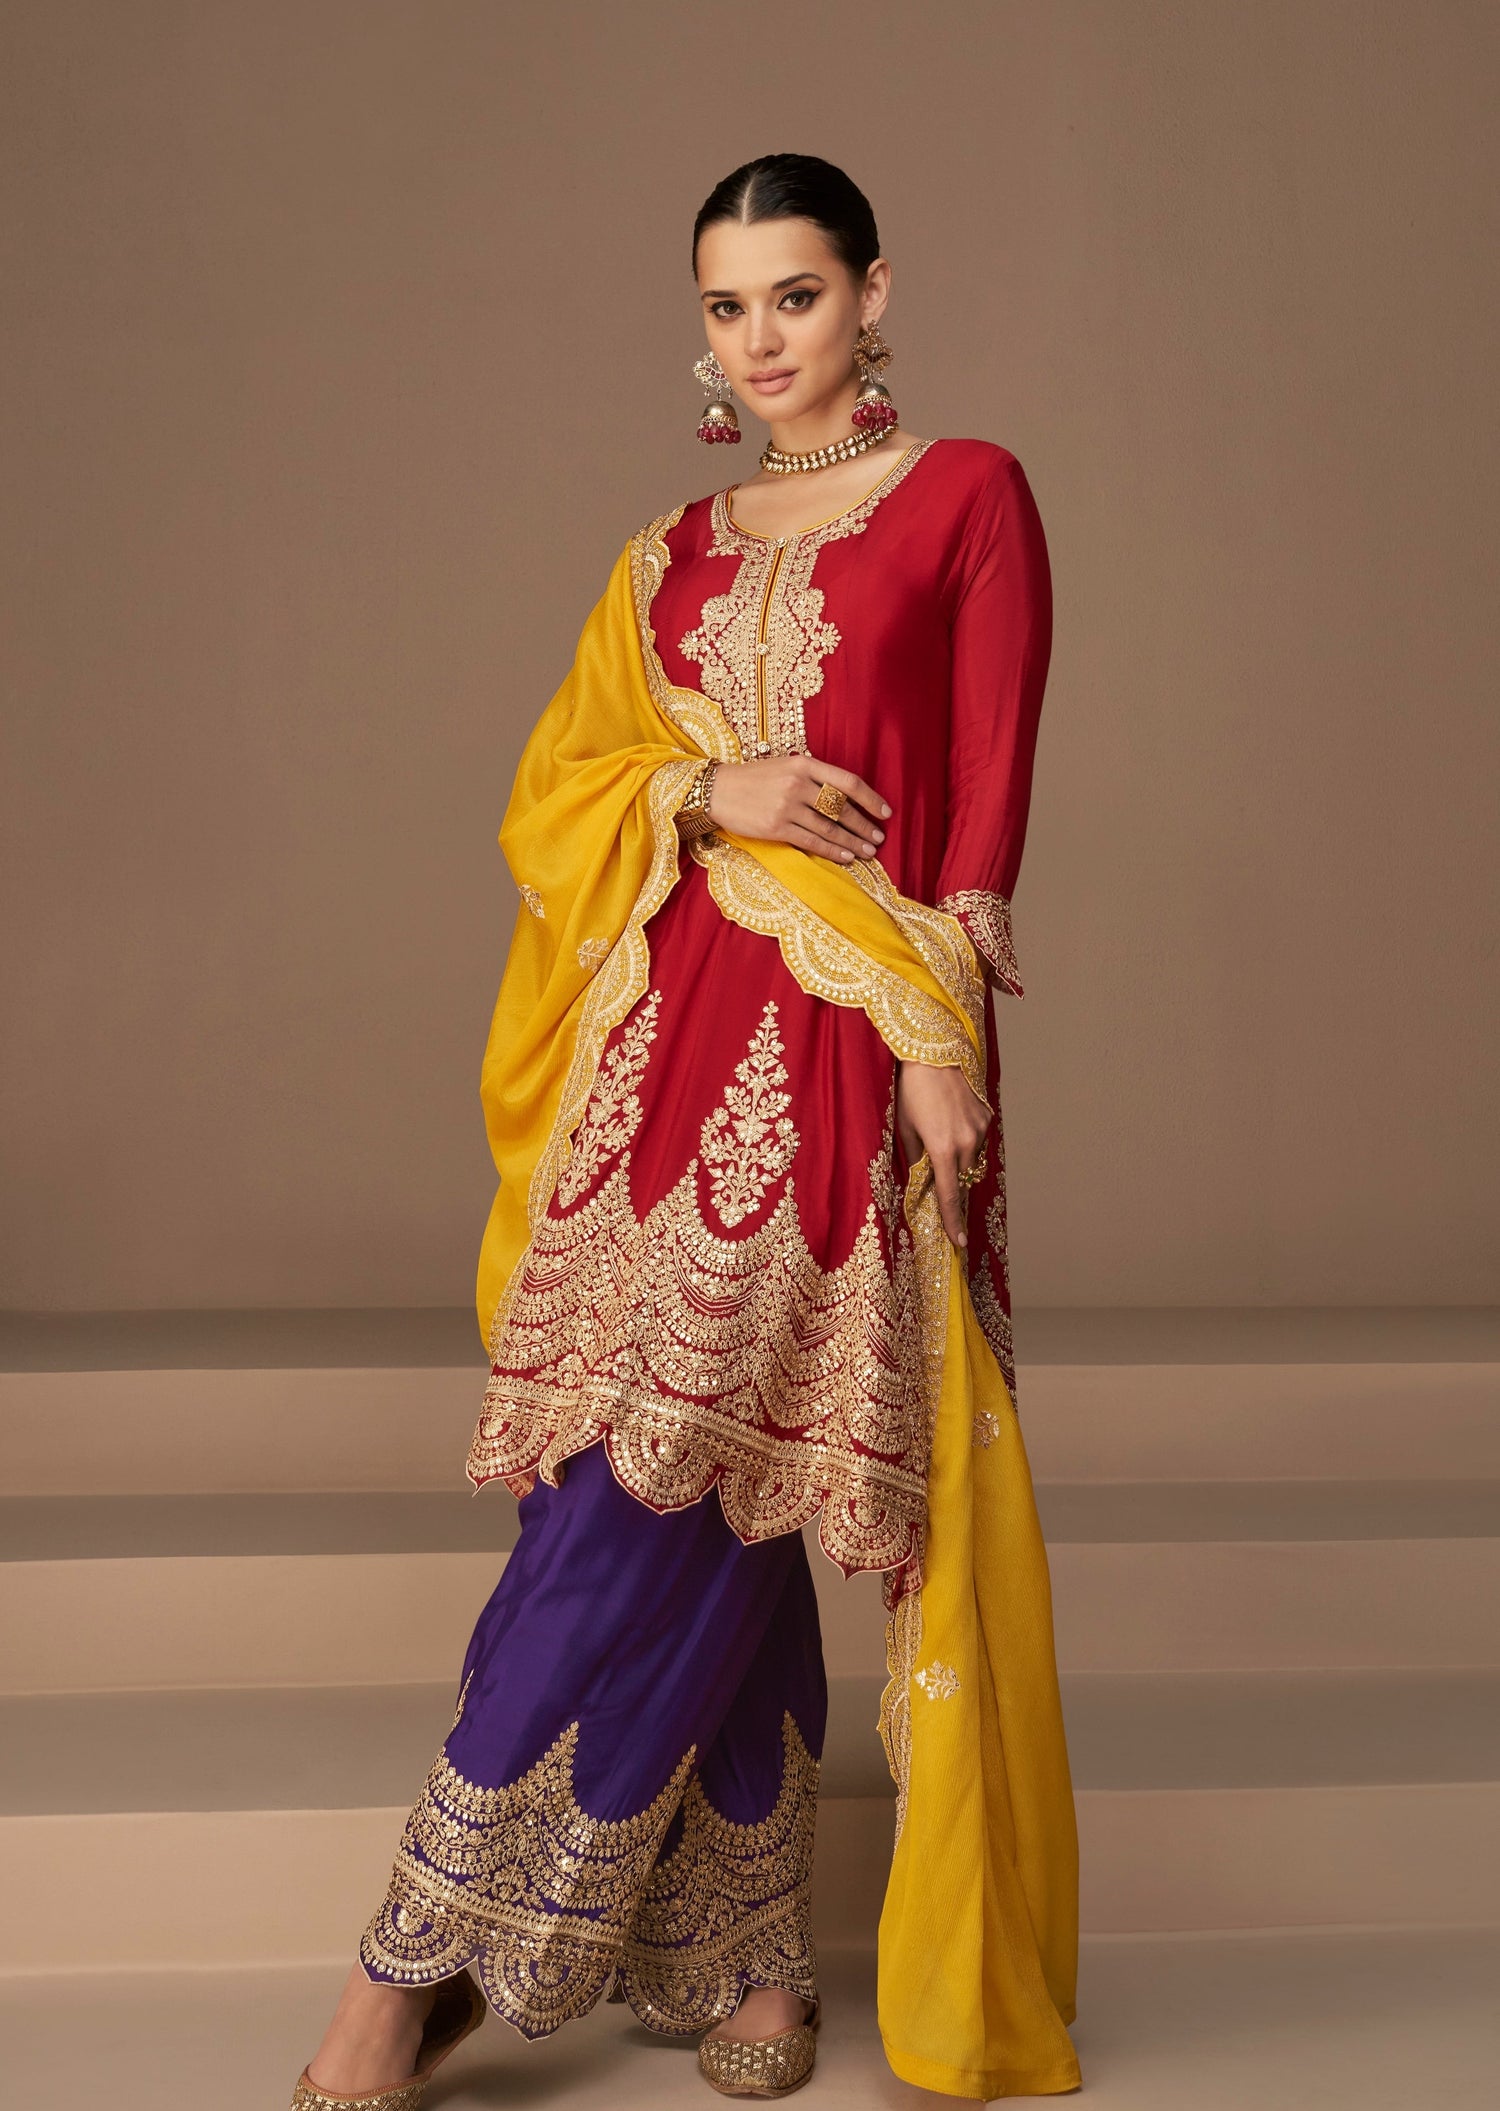 Lohri Outfit Ideas, Punjabi Suits, Dress For Lohri (2020 Trends)